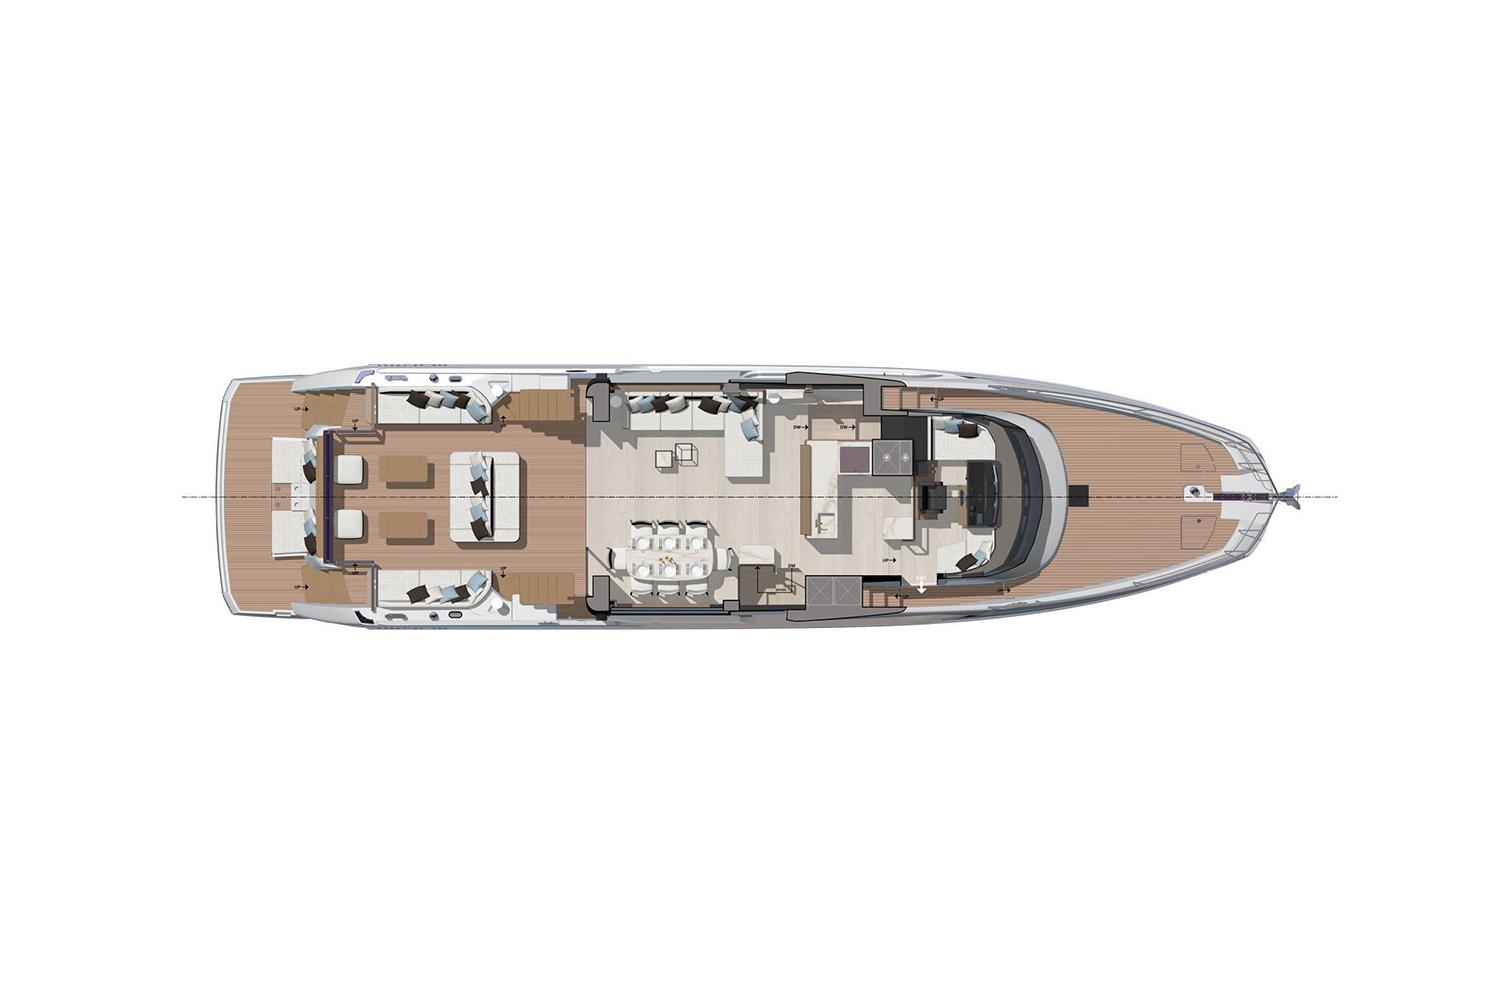 Il Disfrute Yacht Photos Pics Prestige X70 Layout Main Deck